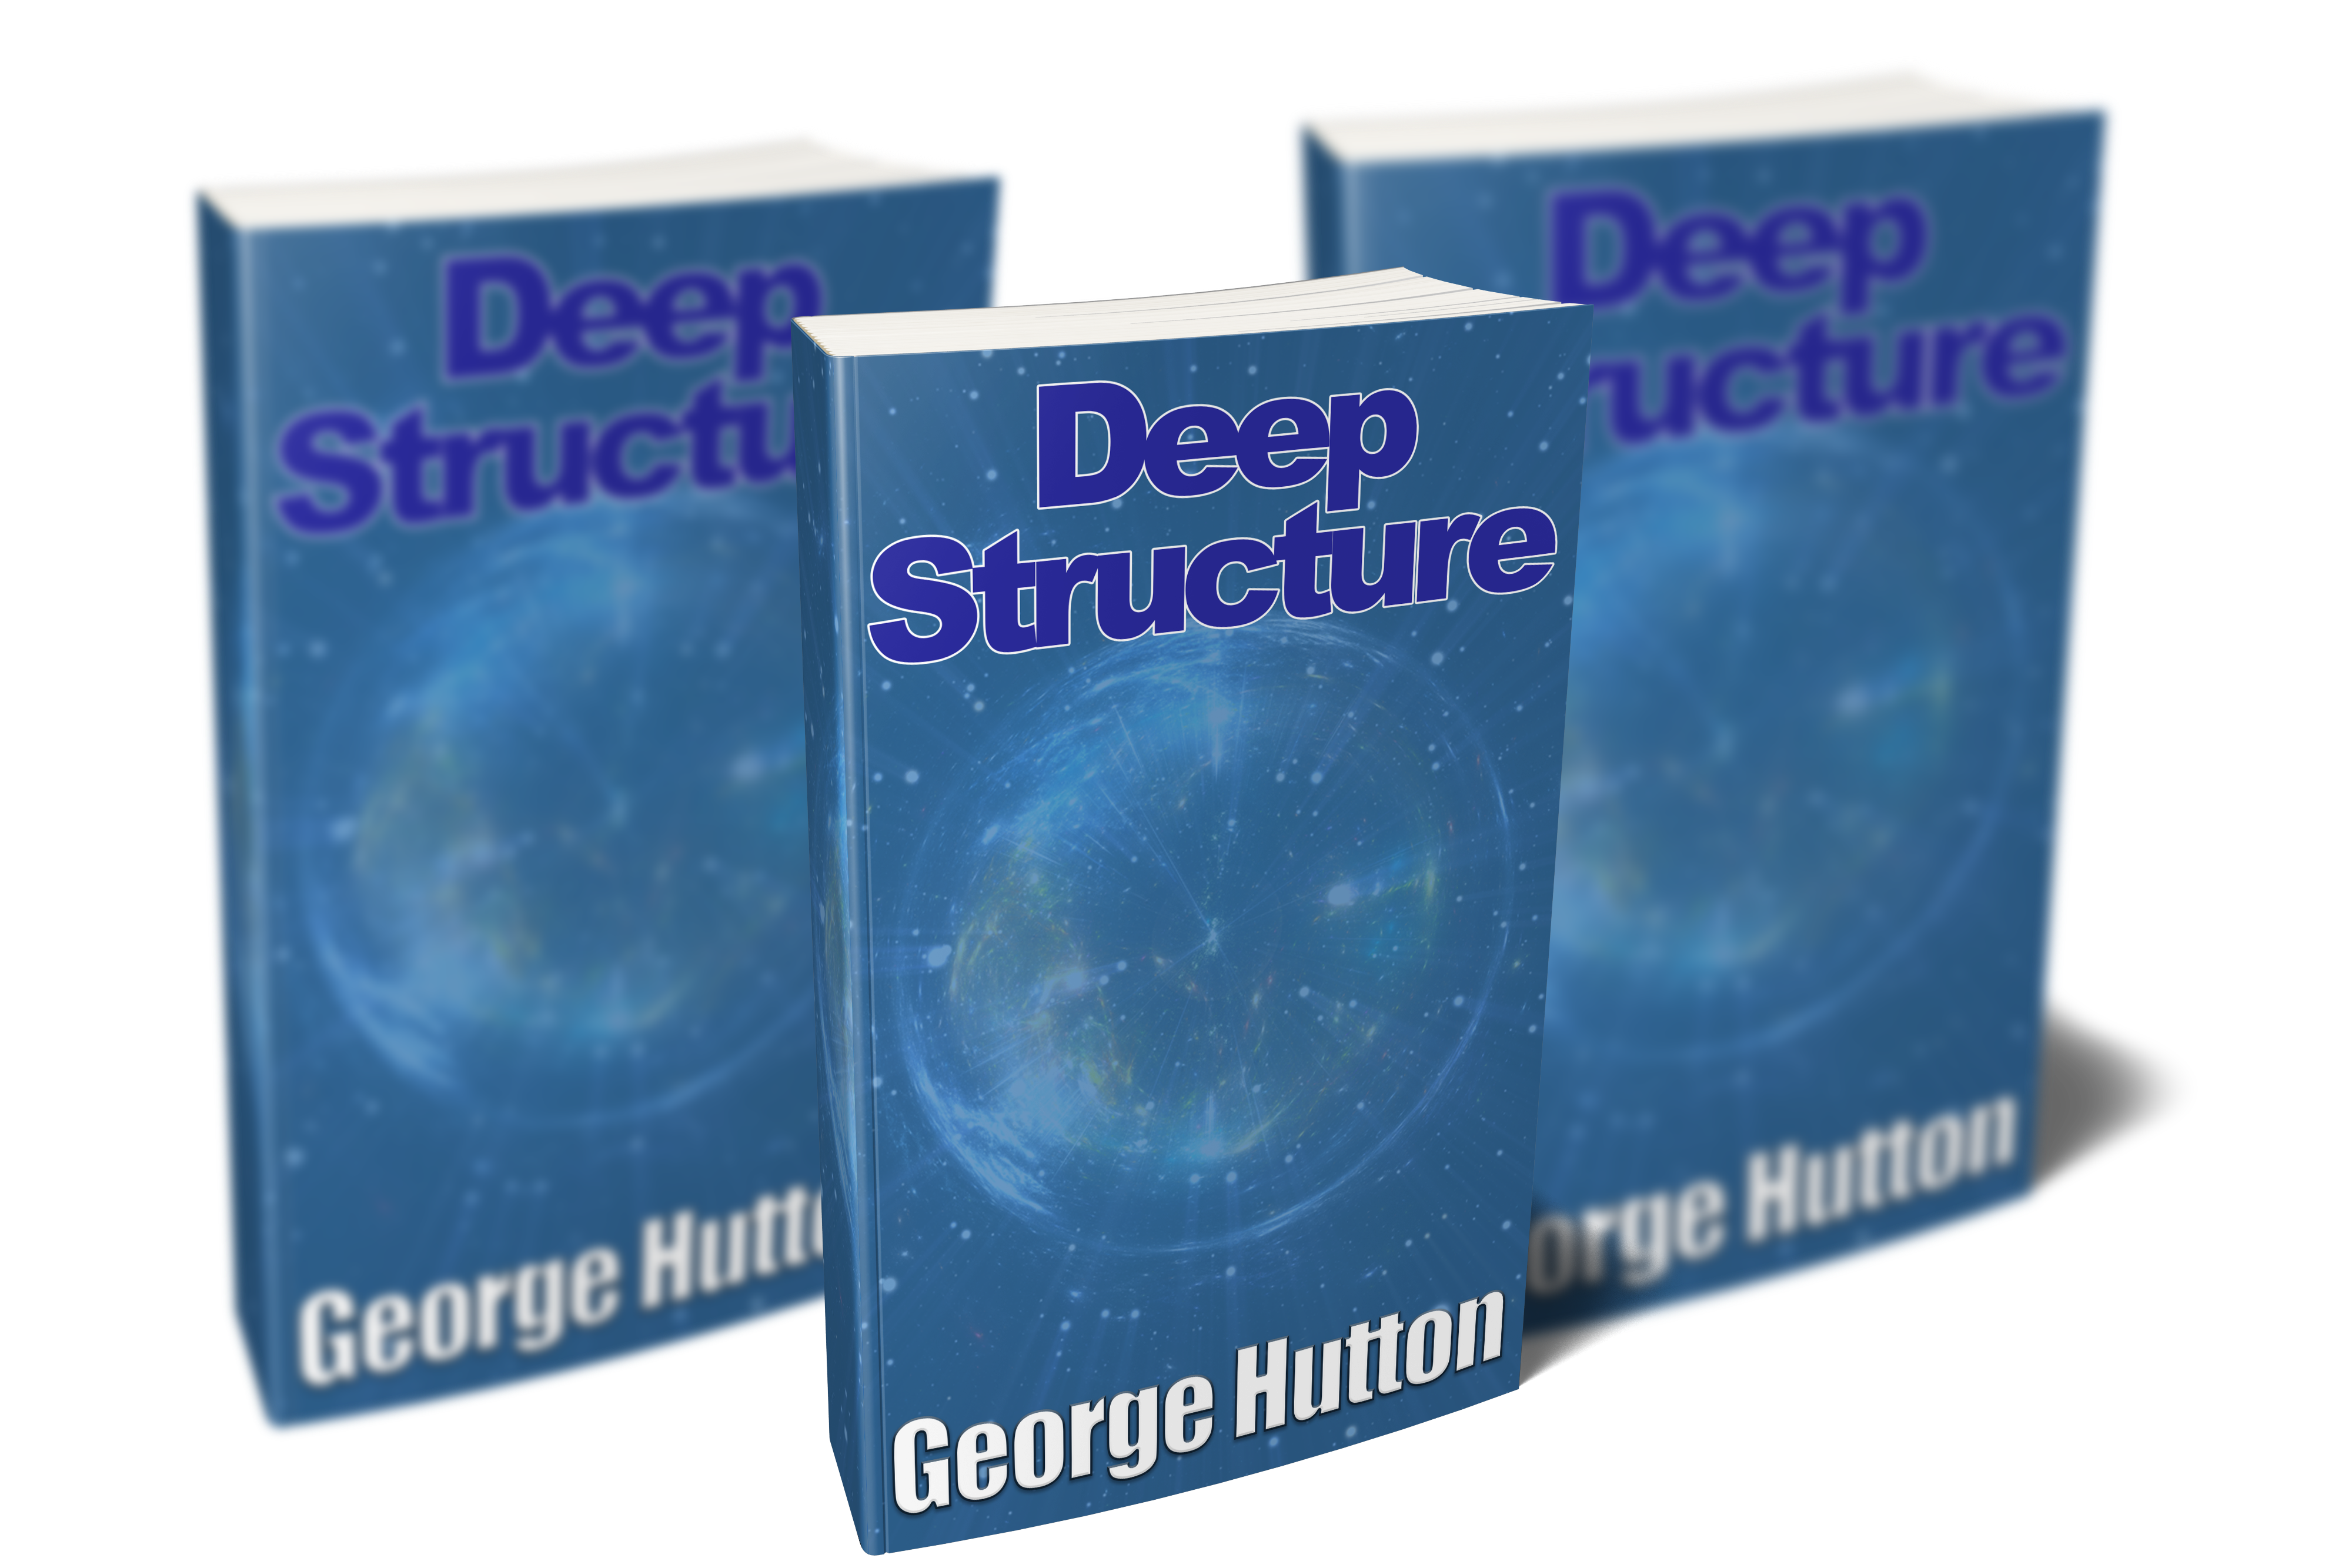 Deep Structure